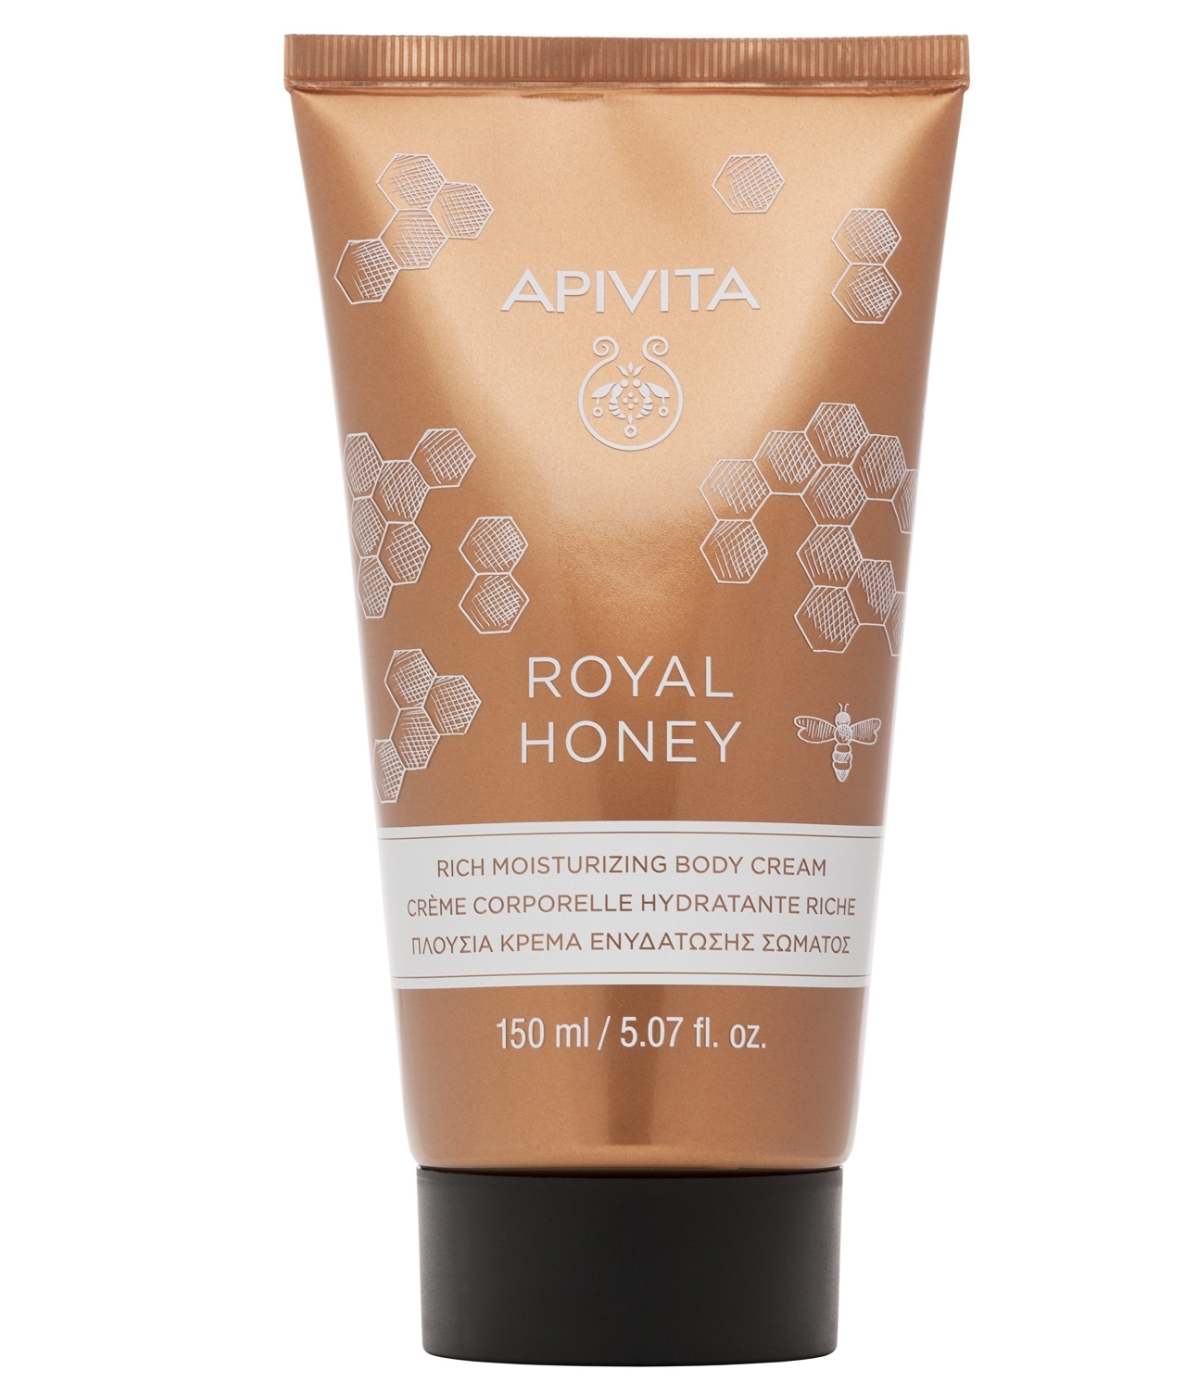 Royal Honey Rich Moisturizing Body Cream de Apivita.